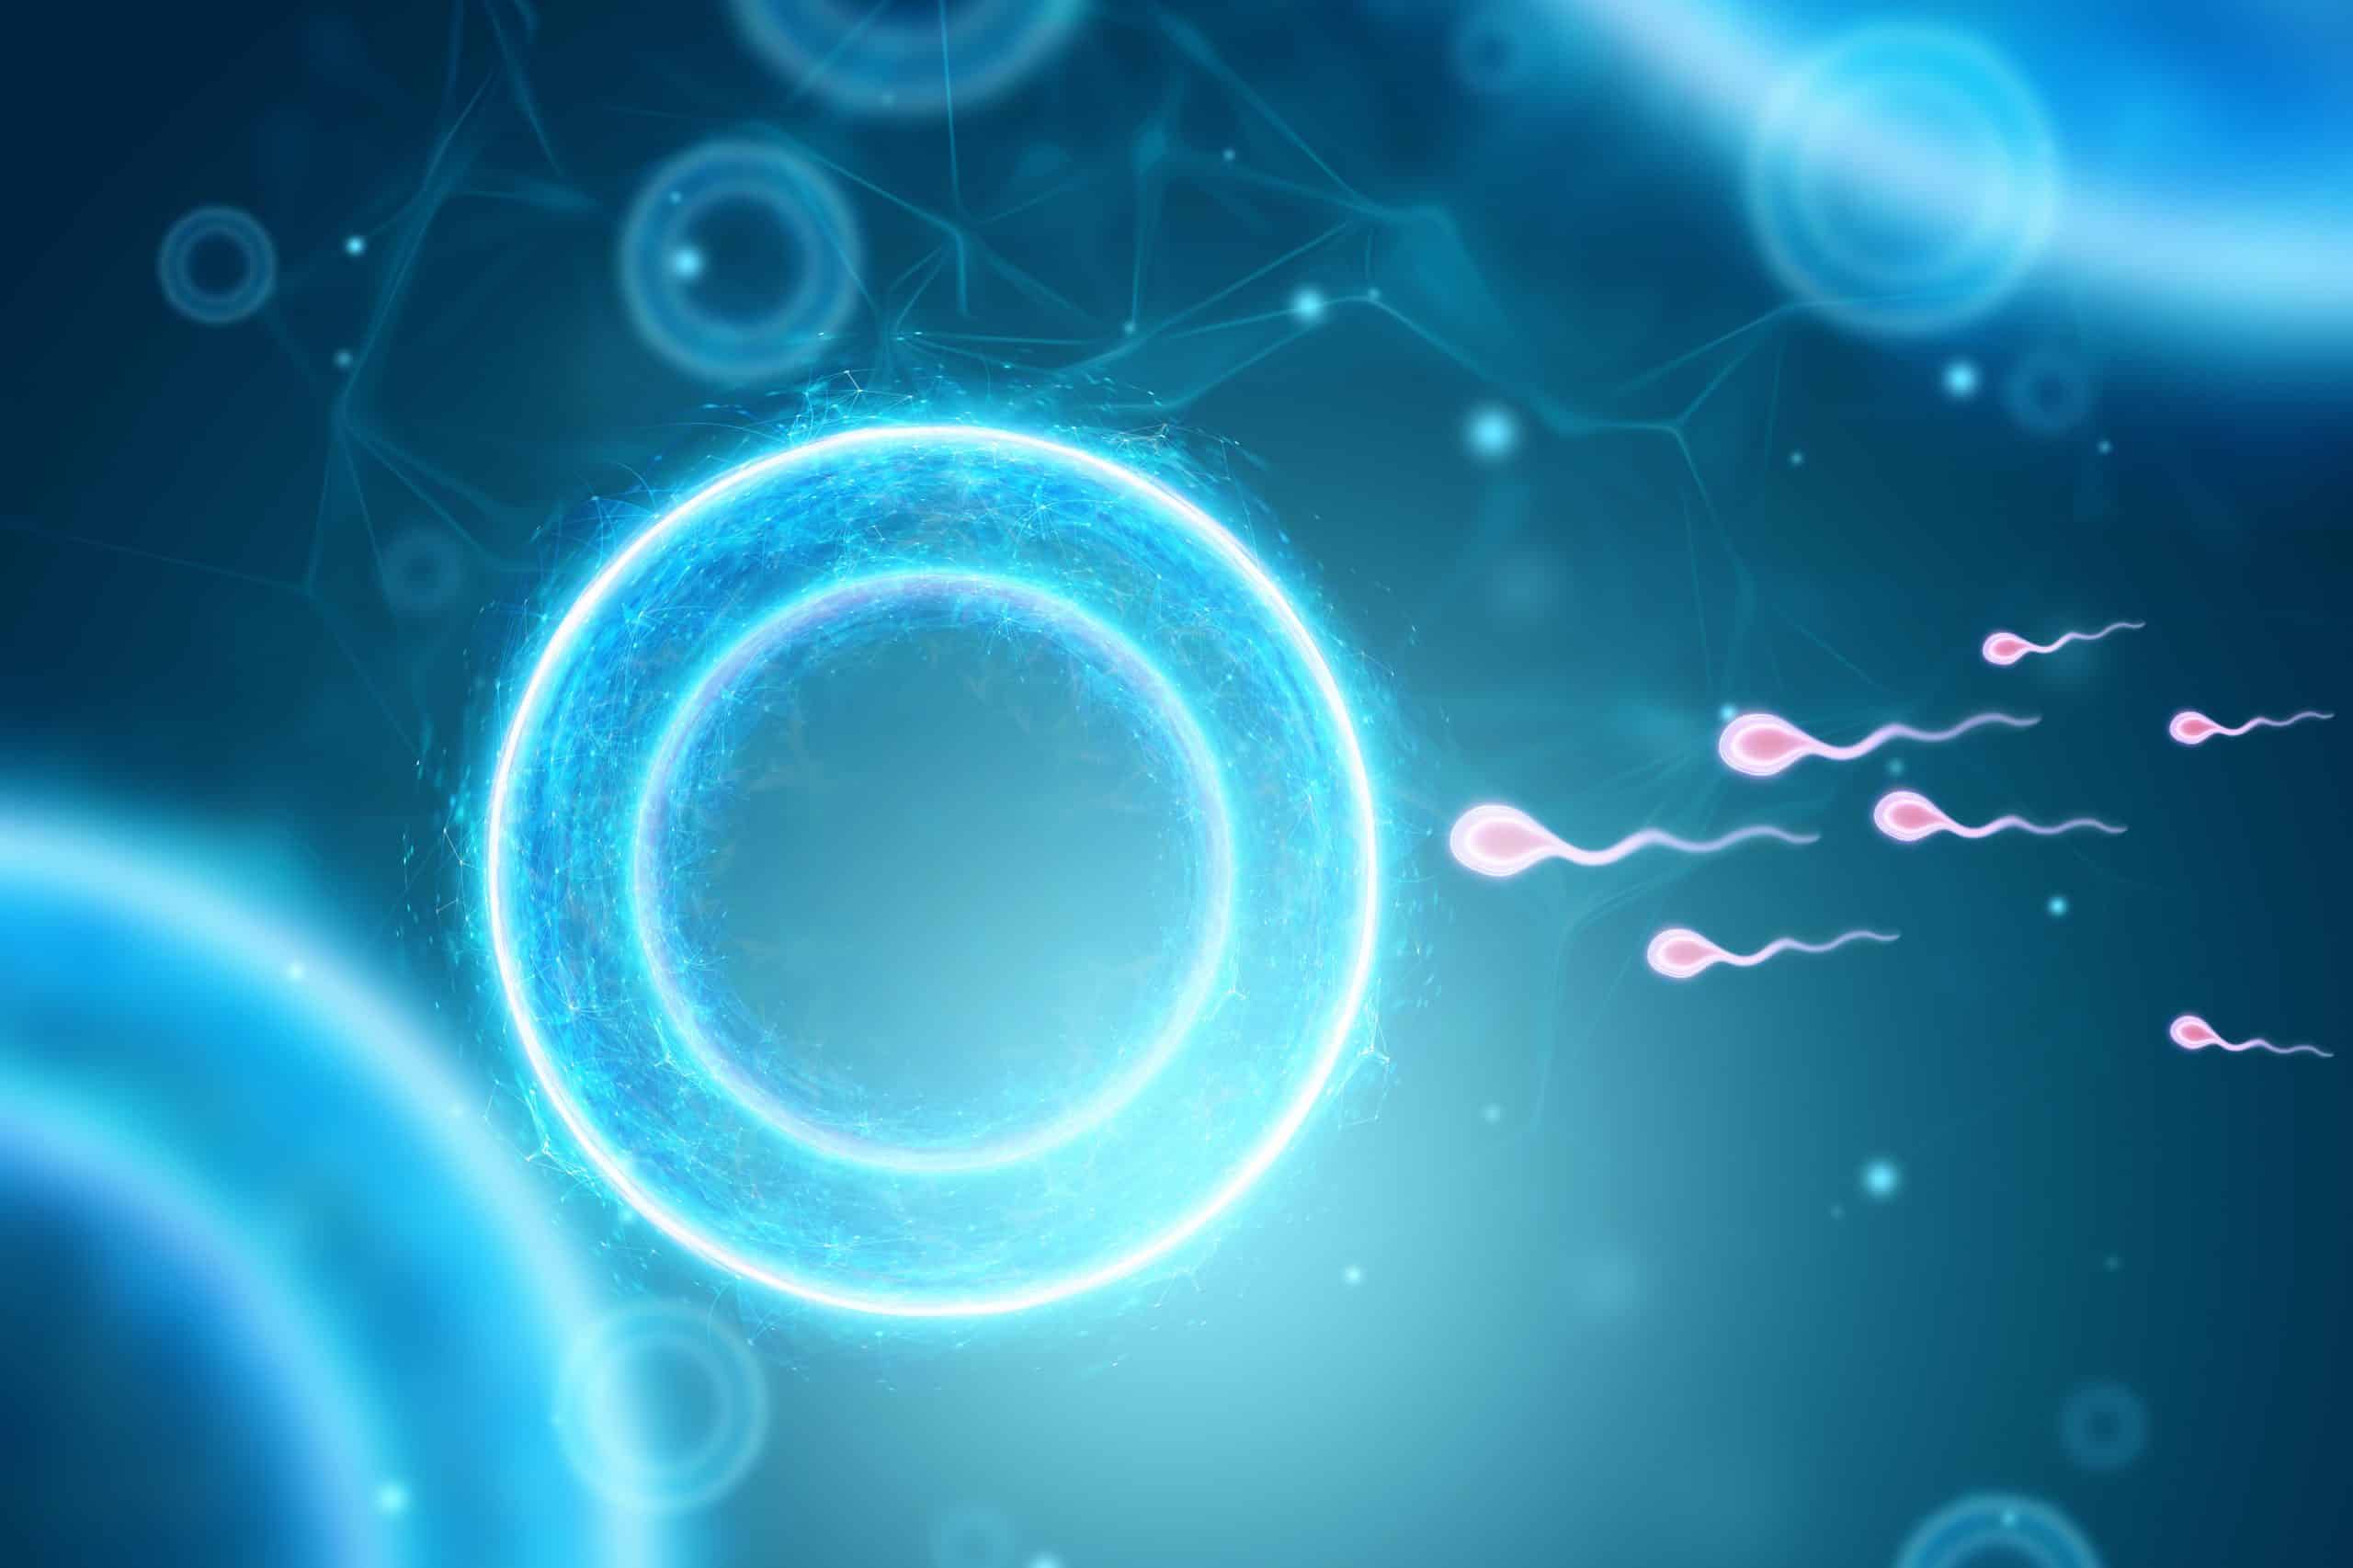 Hombres infértiles disminuye mundialmente el número de espermatozoides